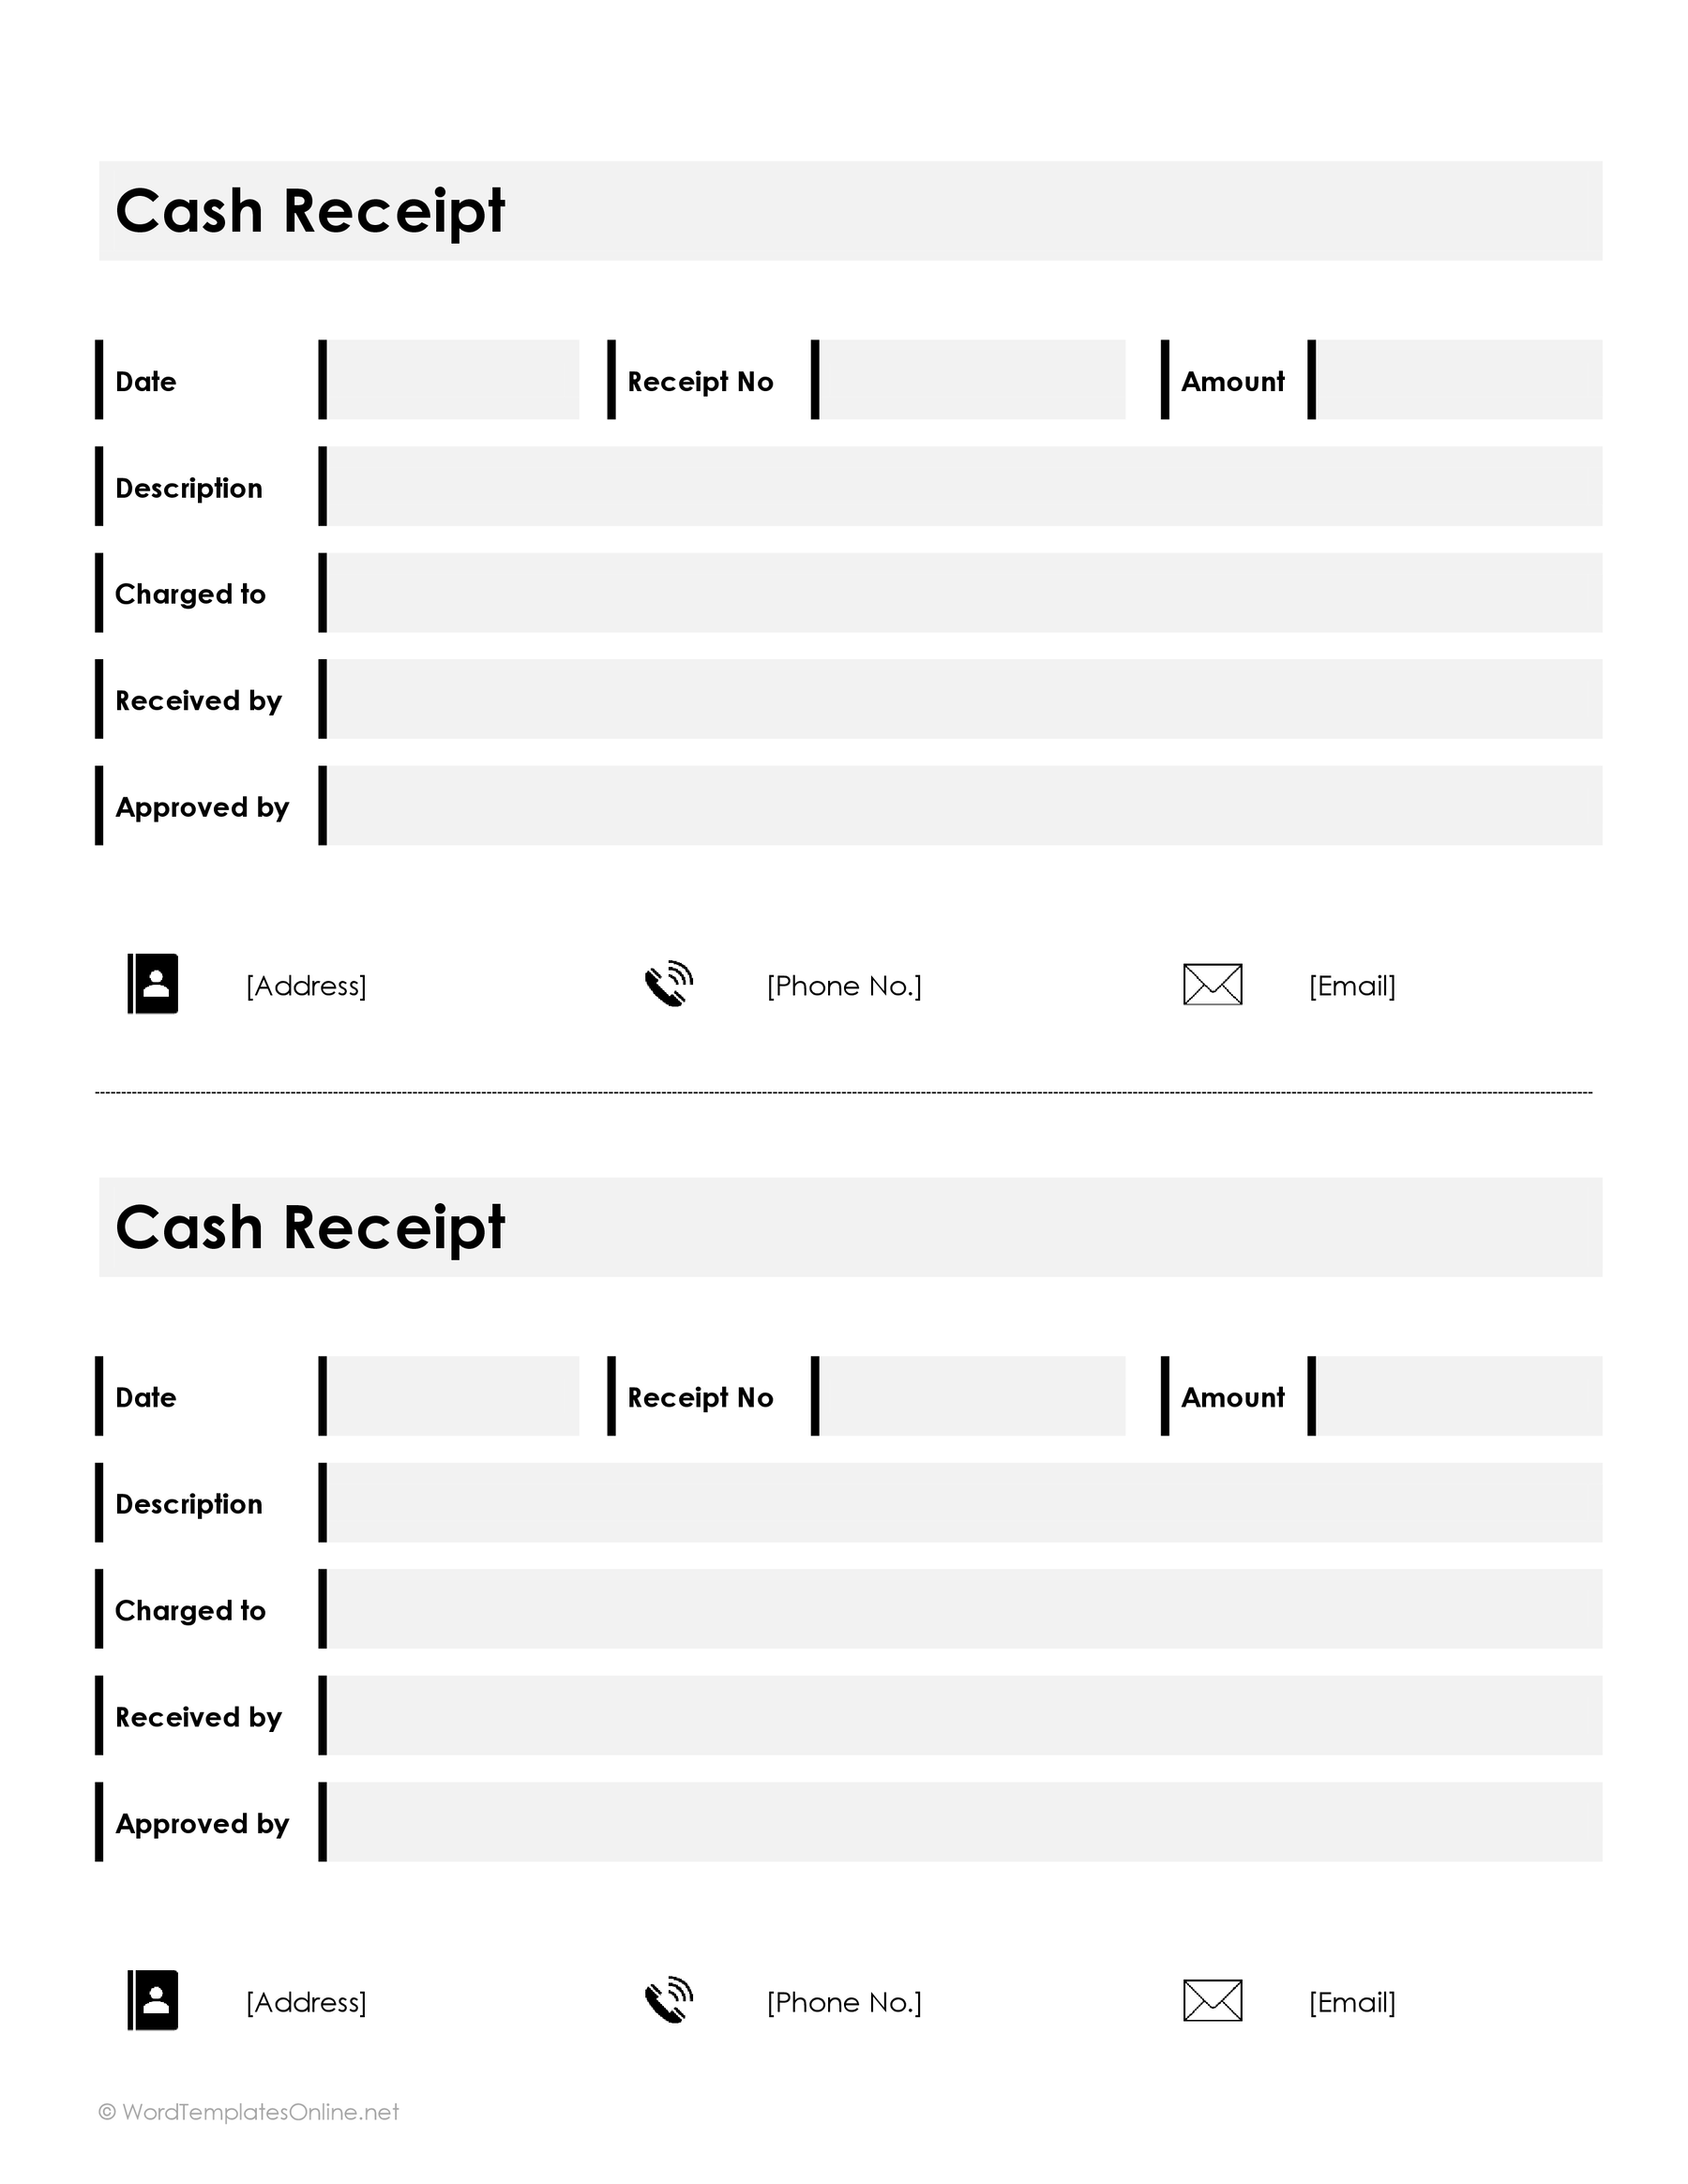 Personalized cash receipt template - PDF